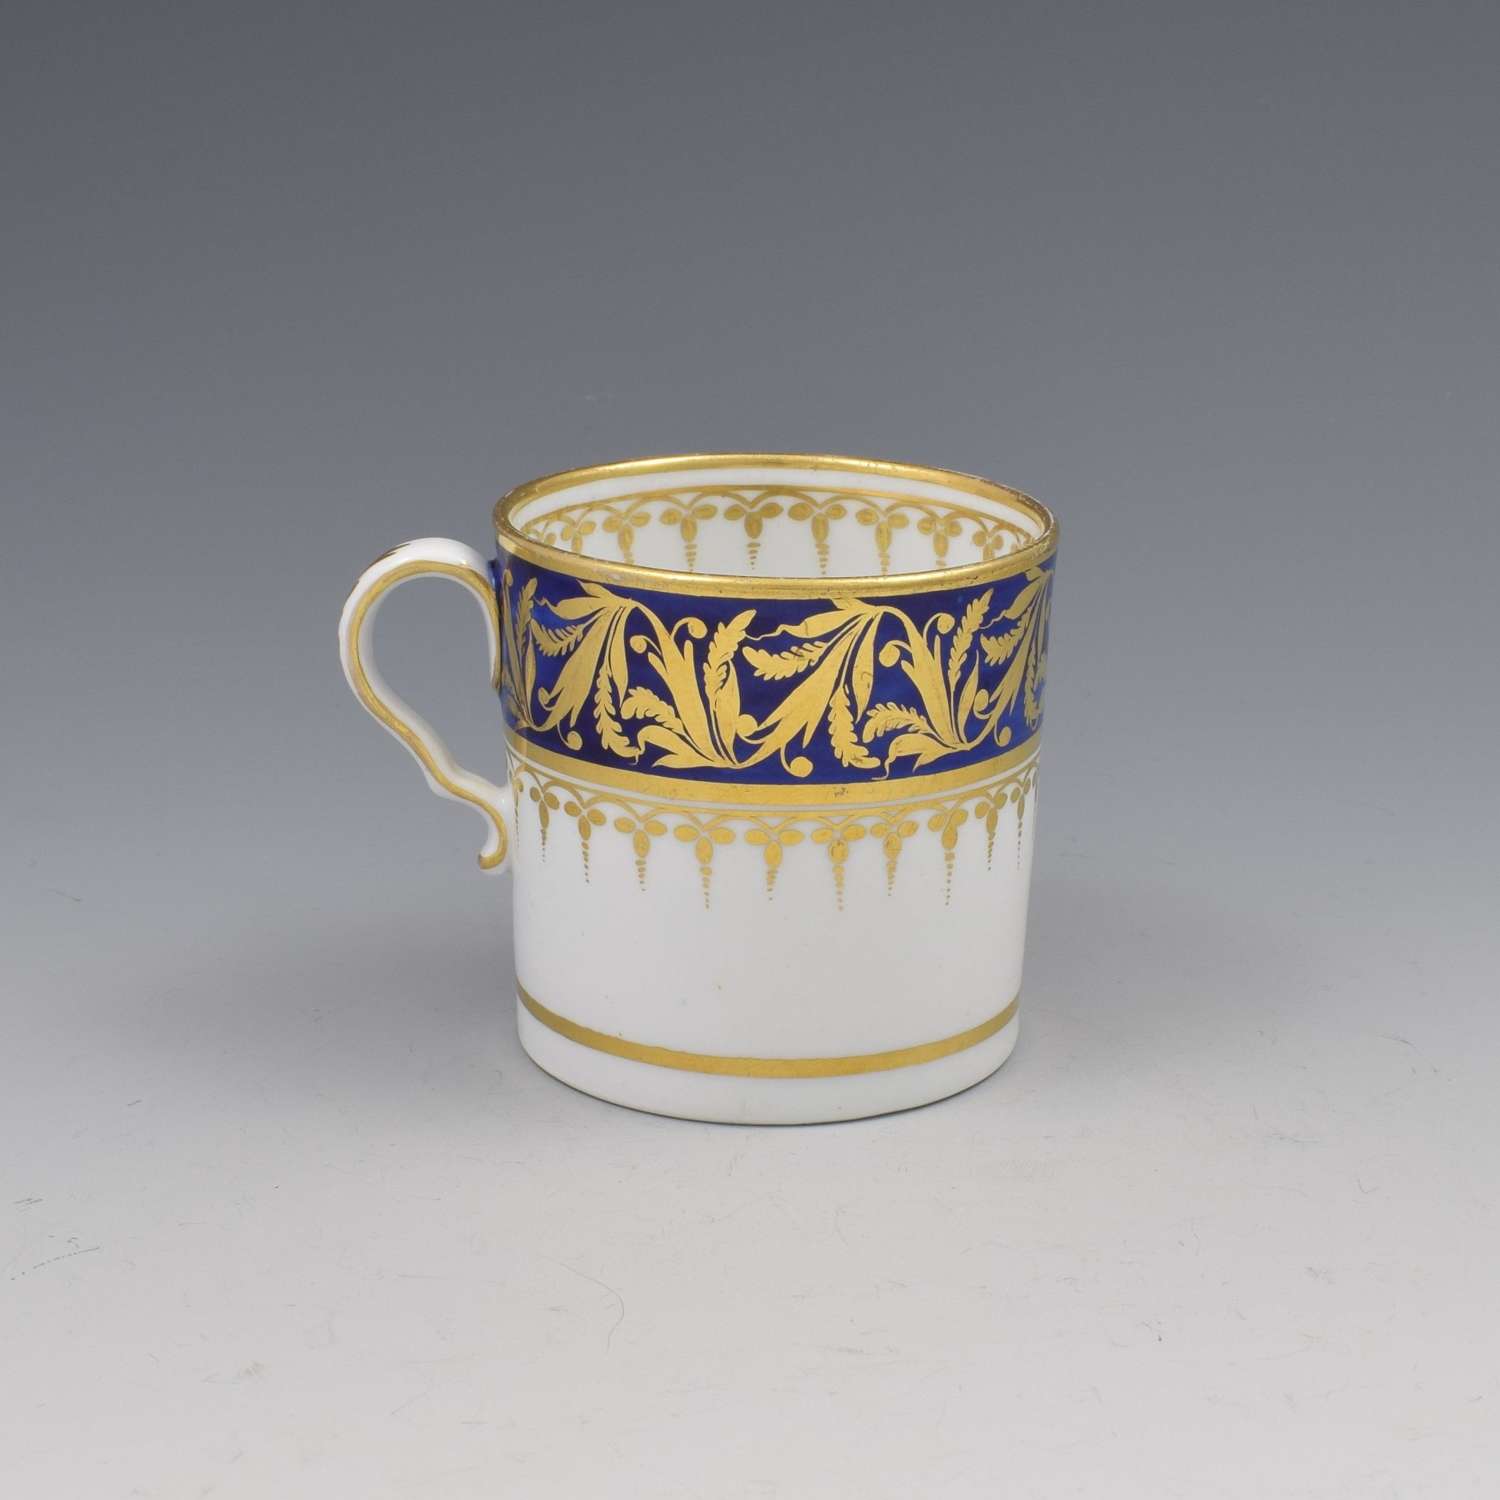 Regency Spode Porcelain Coffee Can c.1800-1810